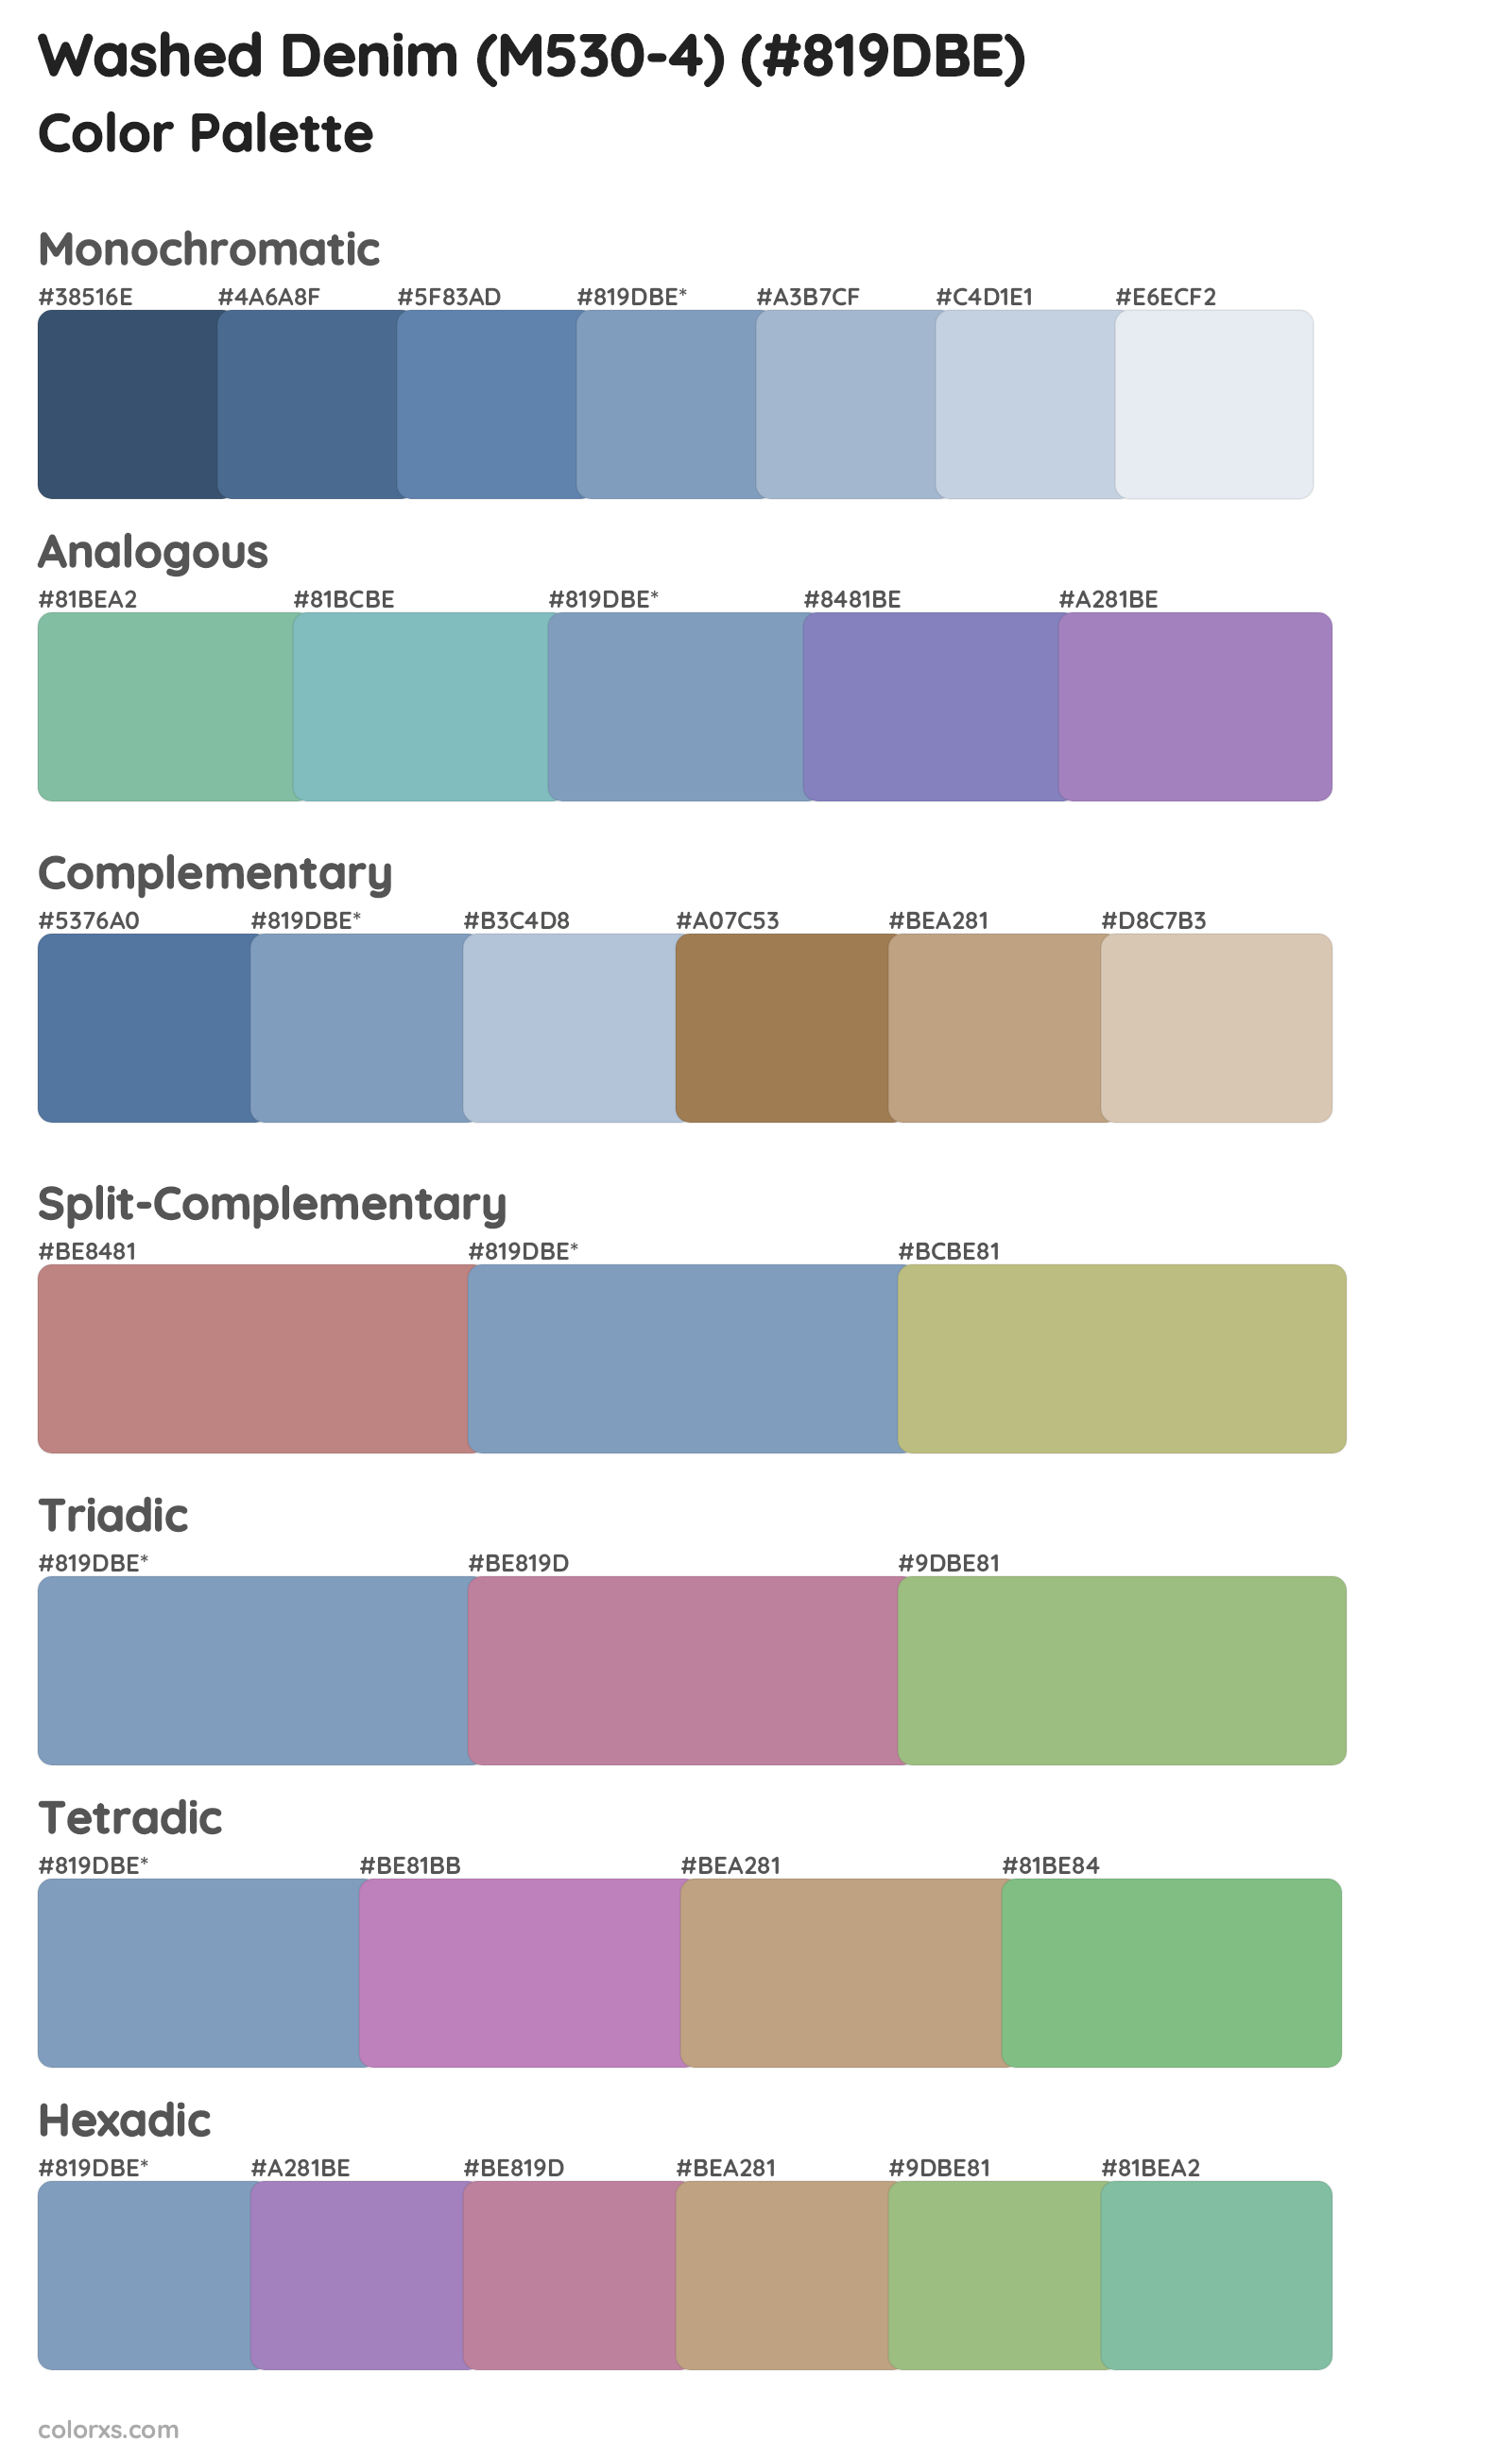 Washed Denim (M530-4) Color Scheme Palettes